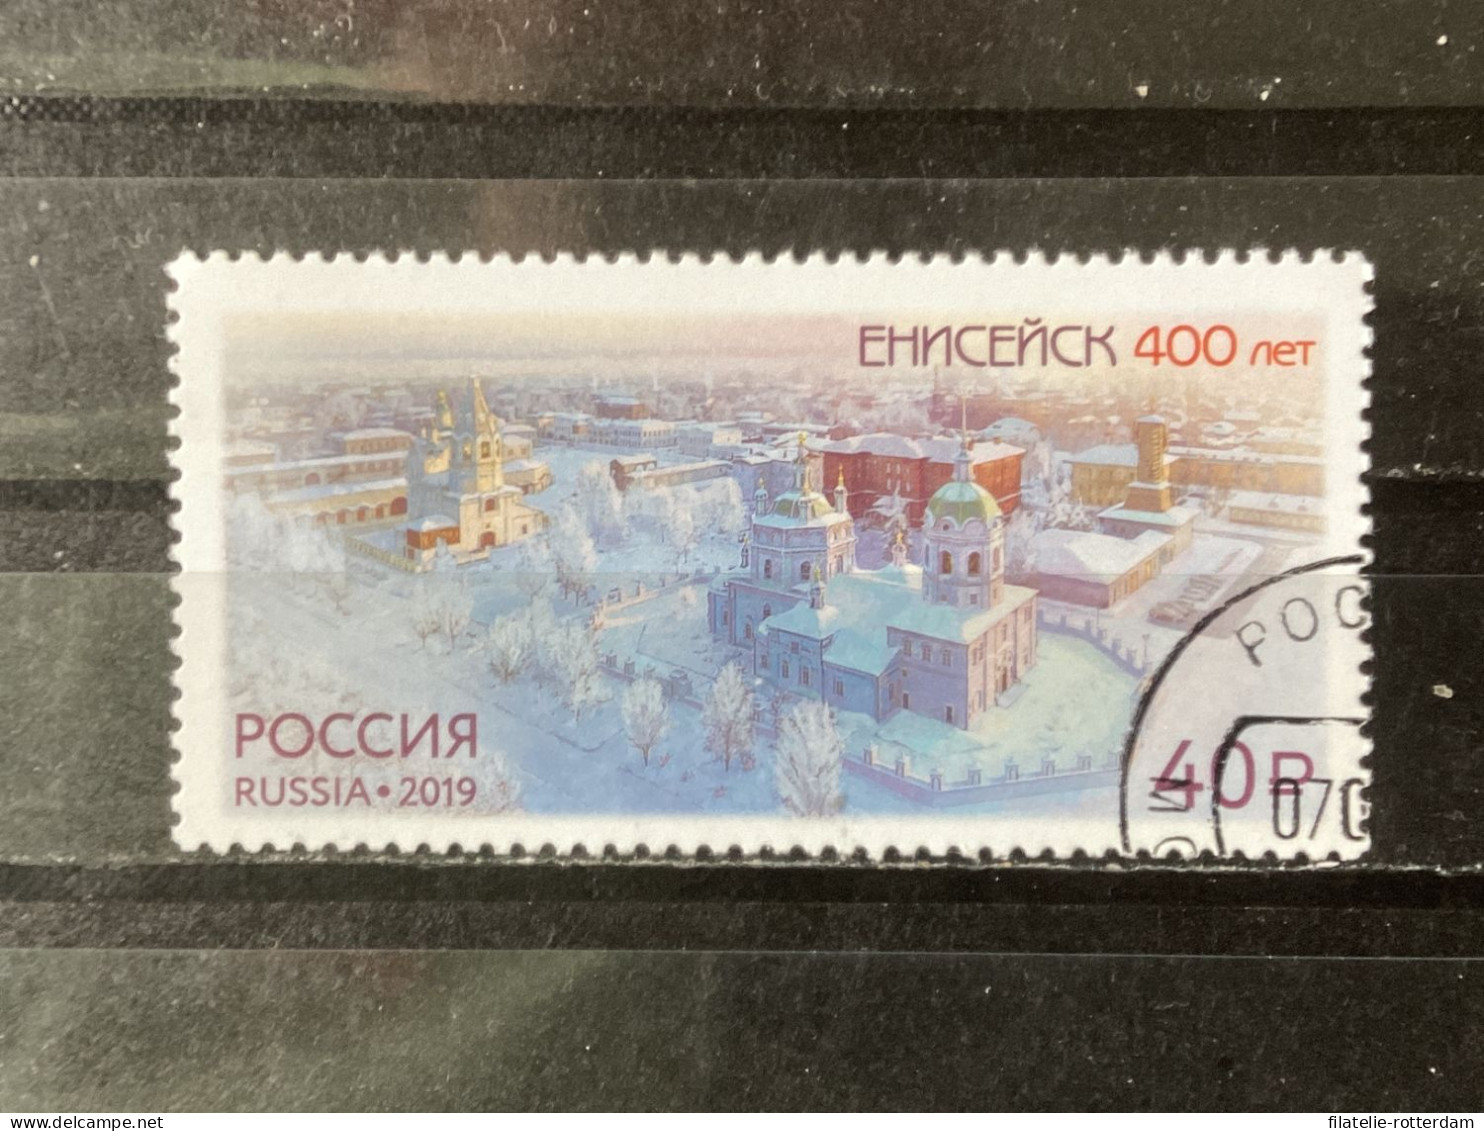 Russia / Rusland - City Of Yeniseysk (40) 2019 - Gebruikt